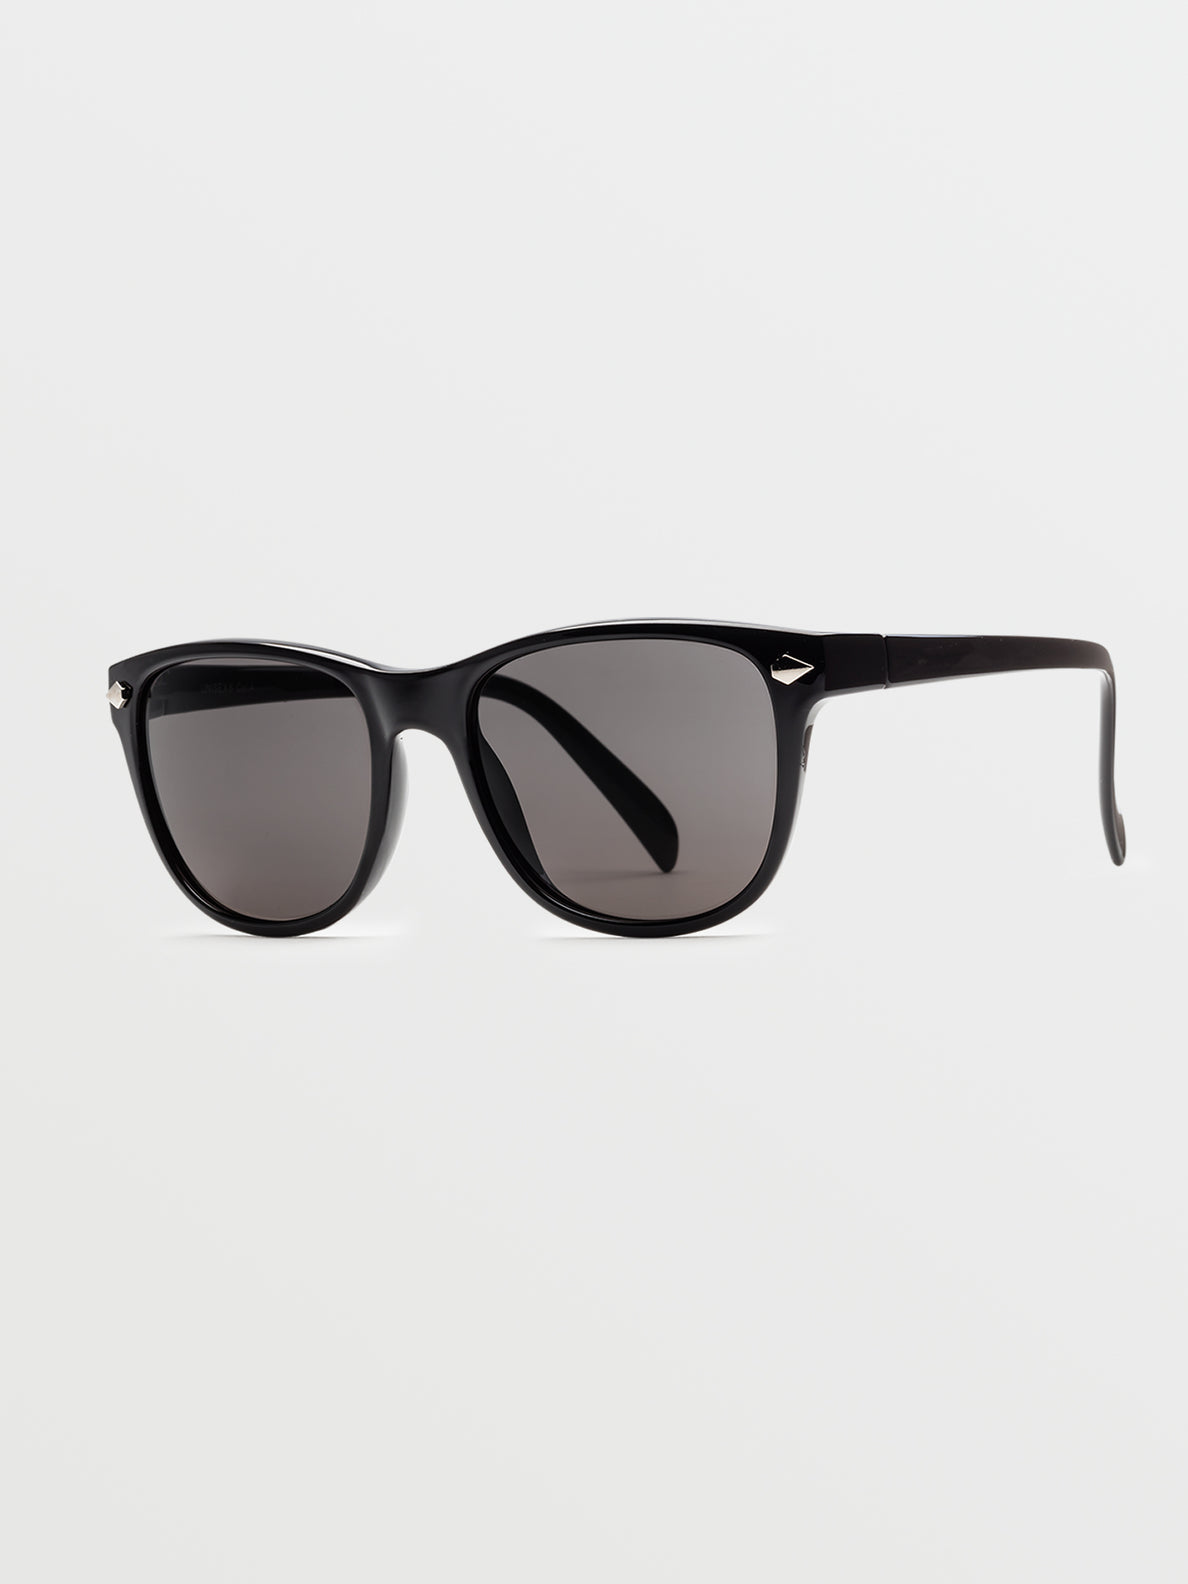 Swing Sunglasses - Gloss Black/Gray